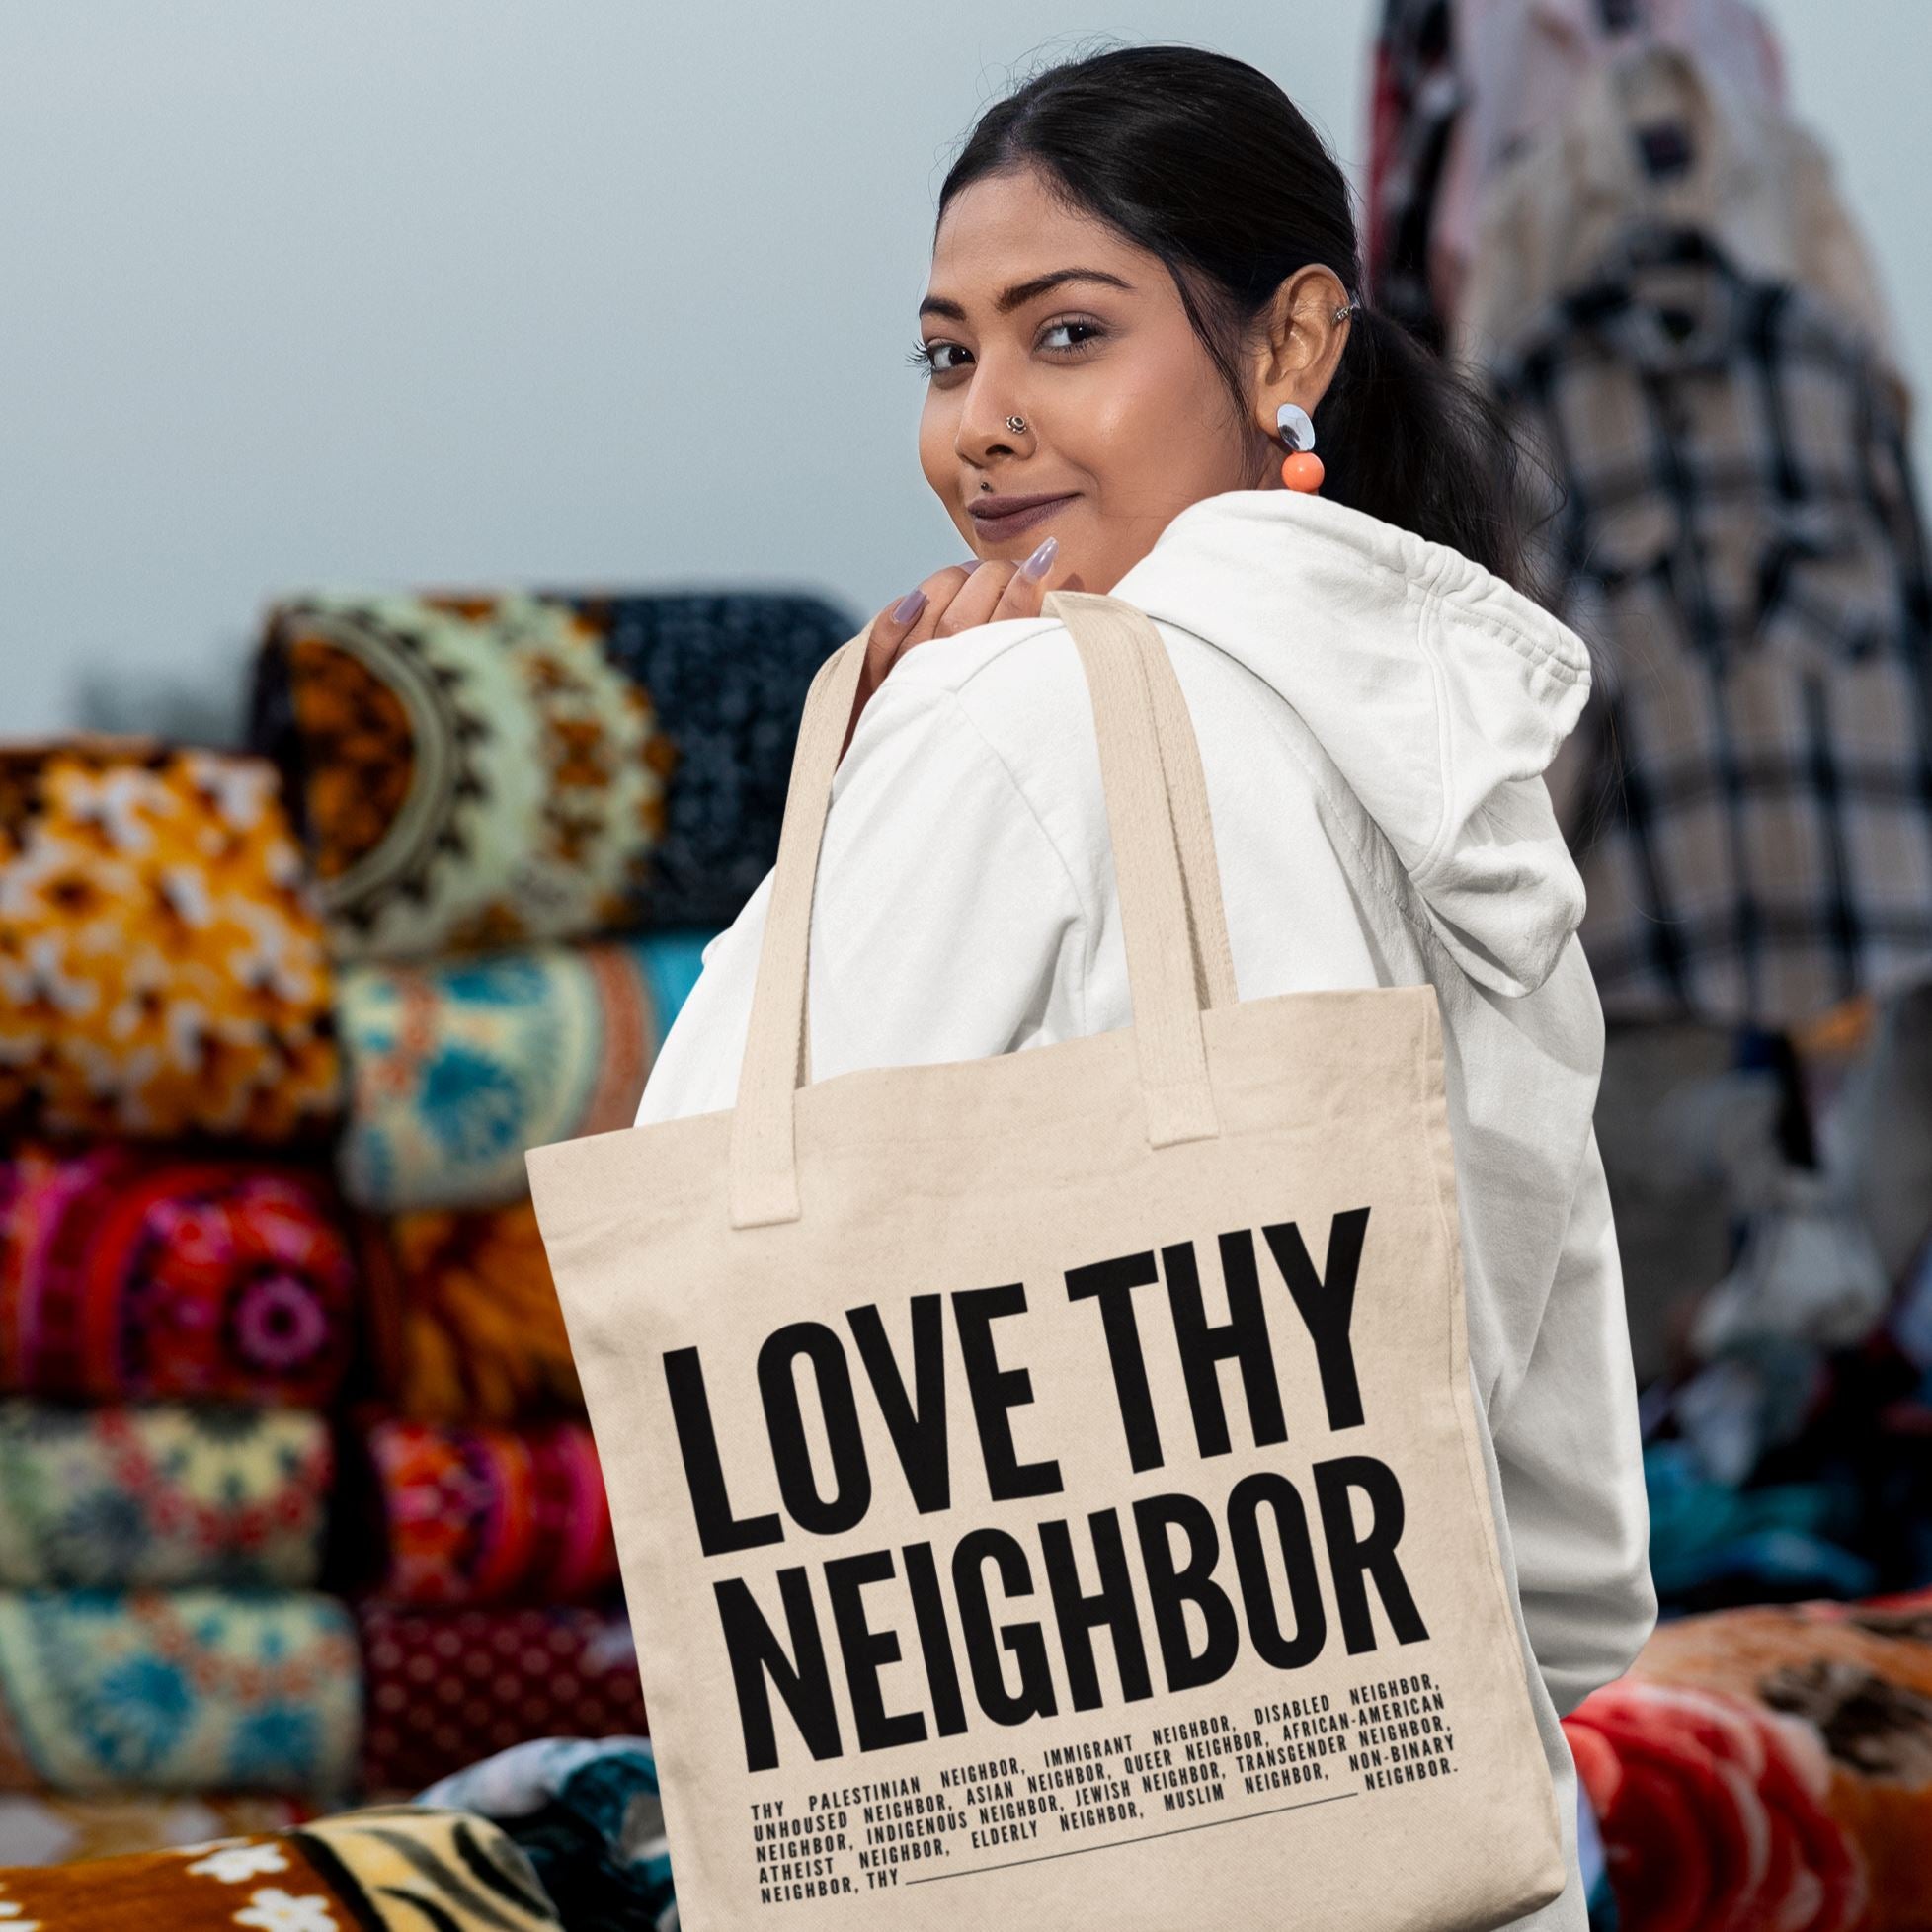 Neighbor | Tote Bag